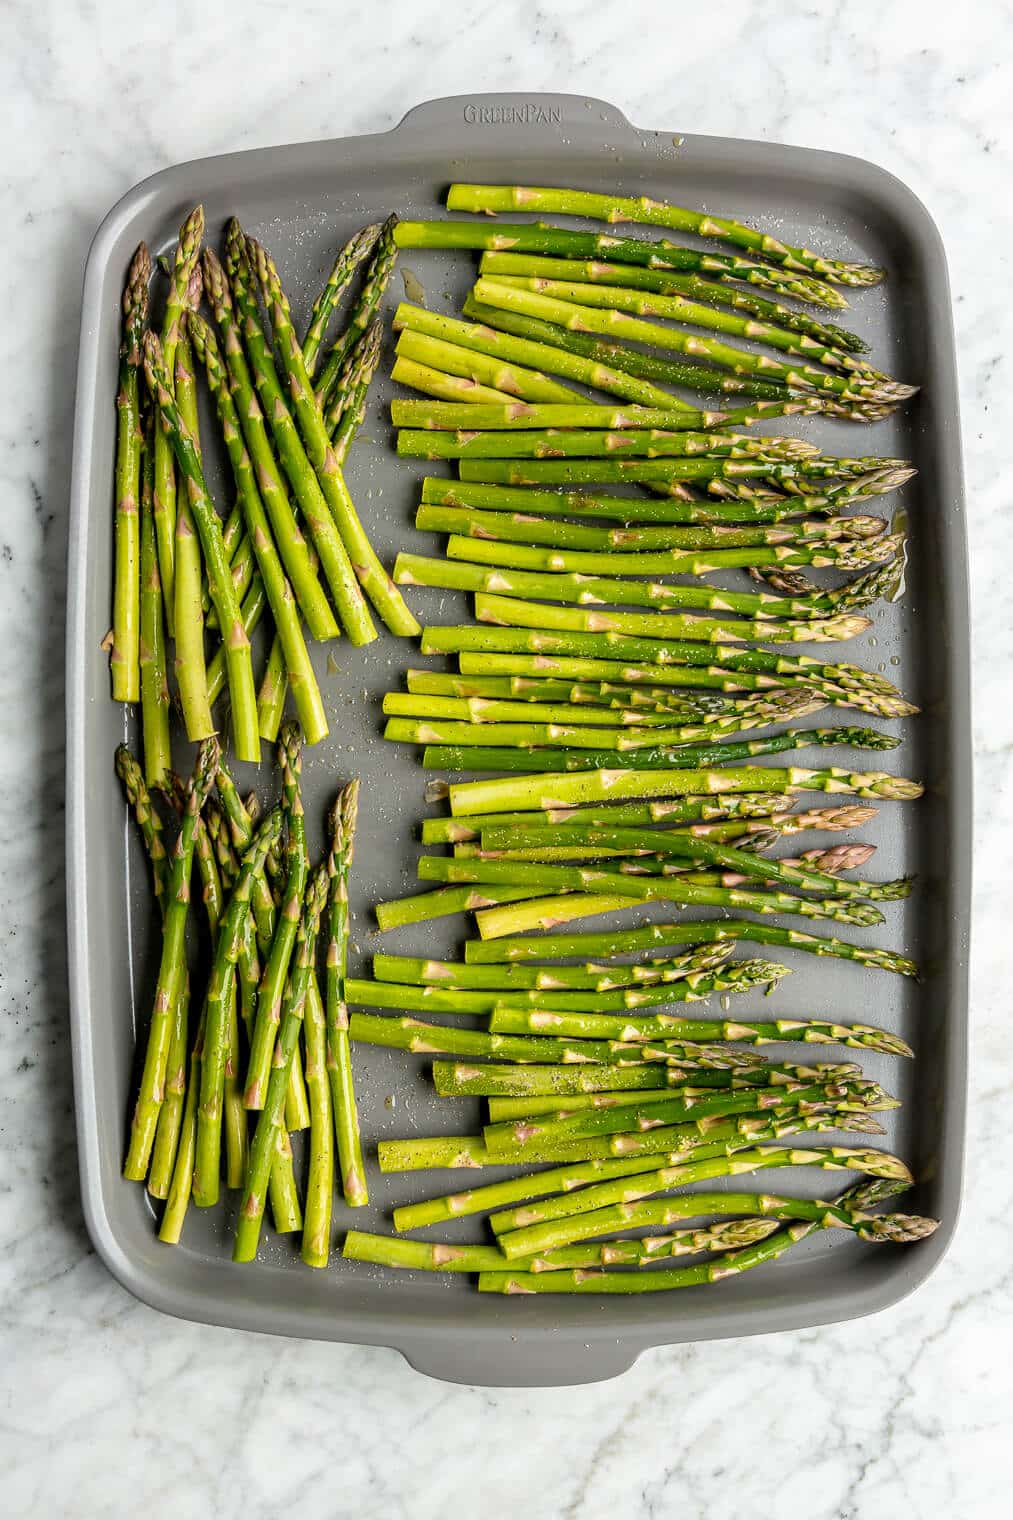 Raw asparagus on a sheet pan.